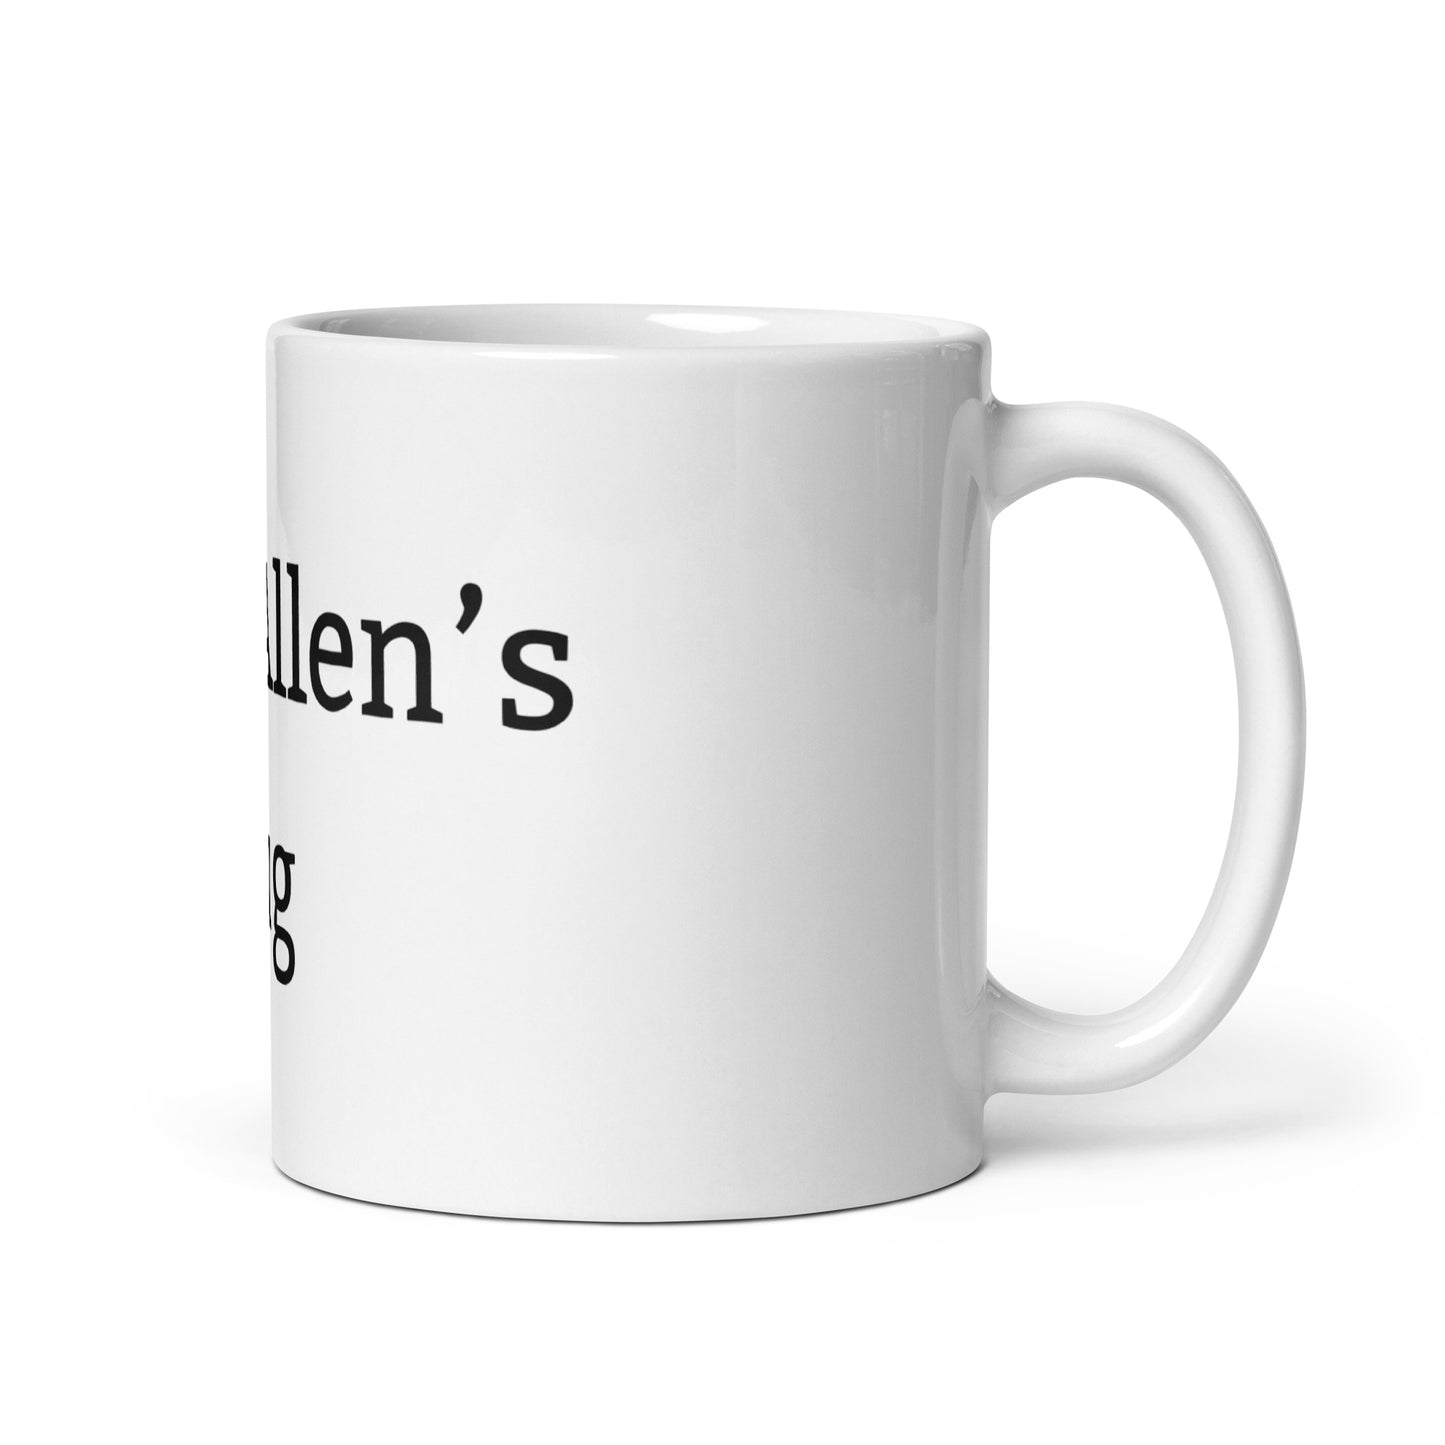 Paul Allen's Mug